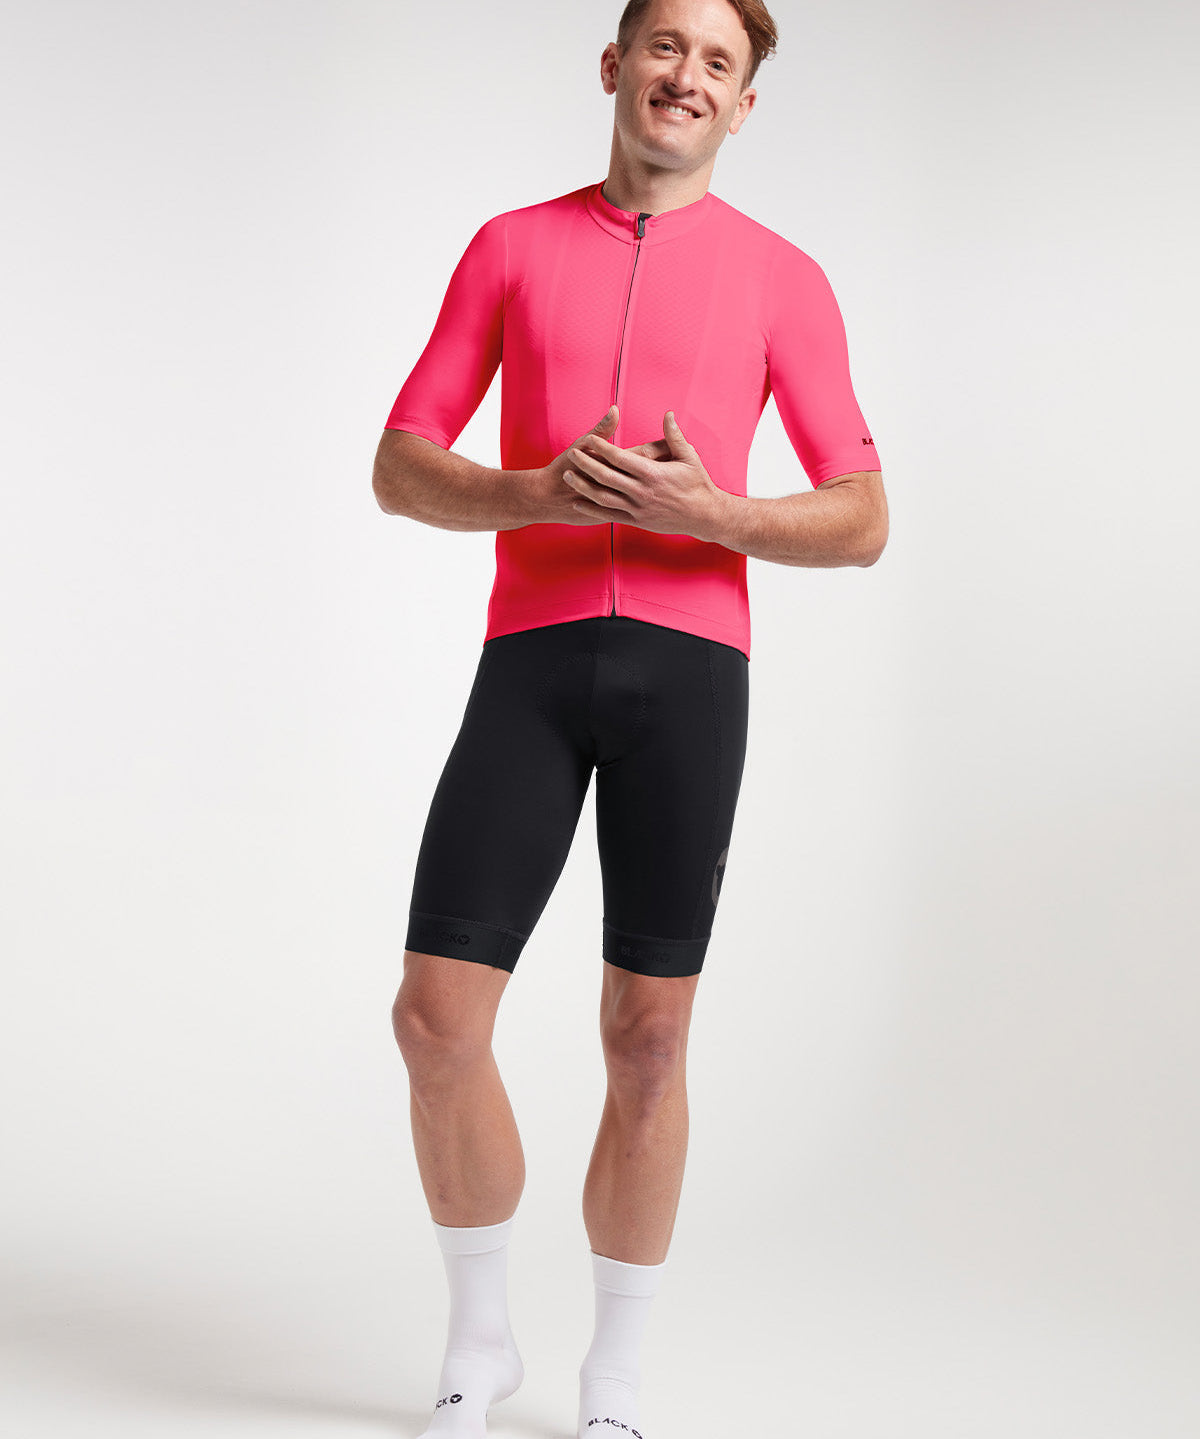 Men's Essentials TEAM Jersey - Neon Pink